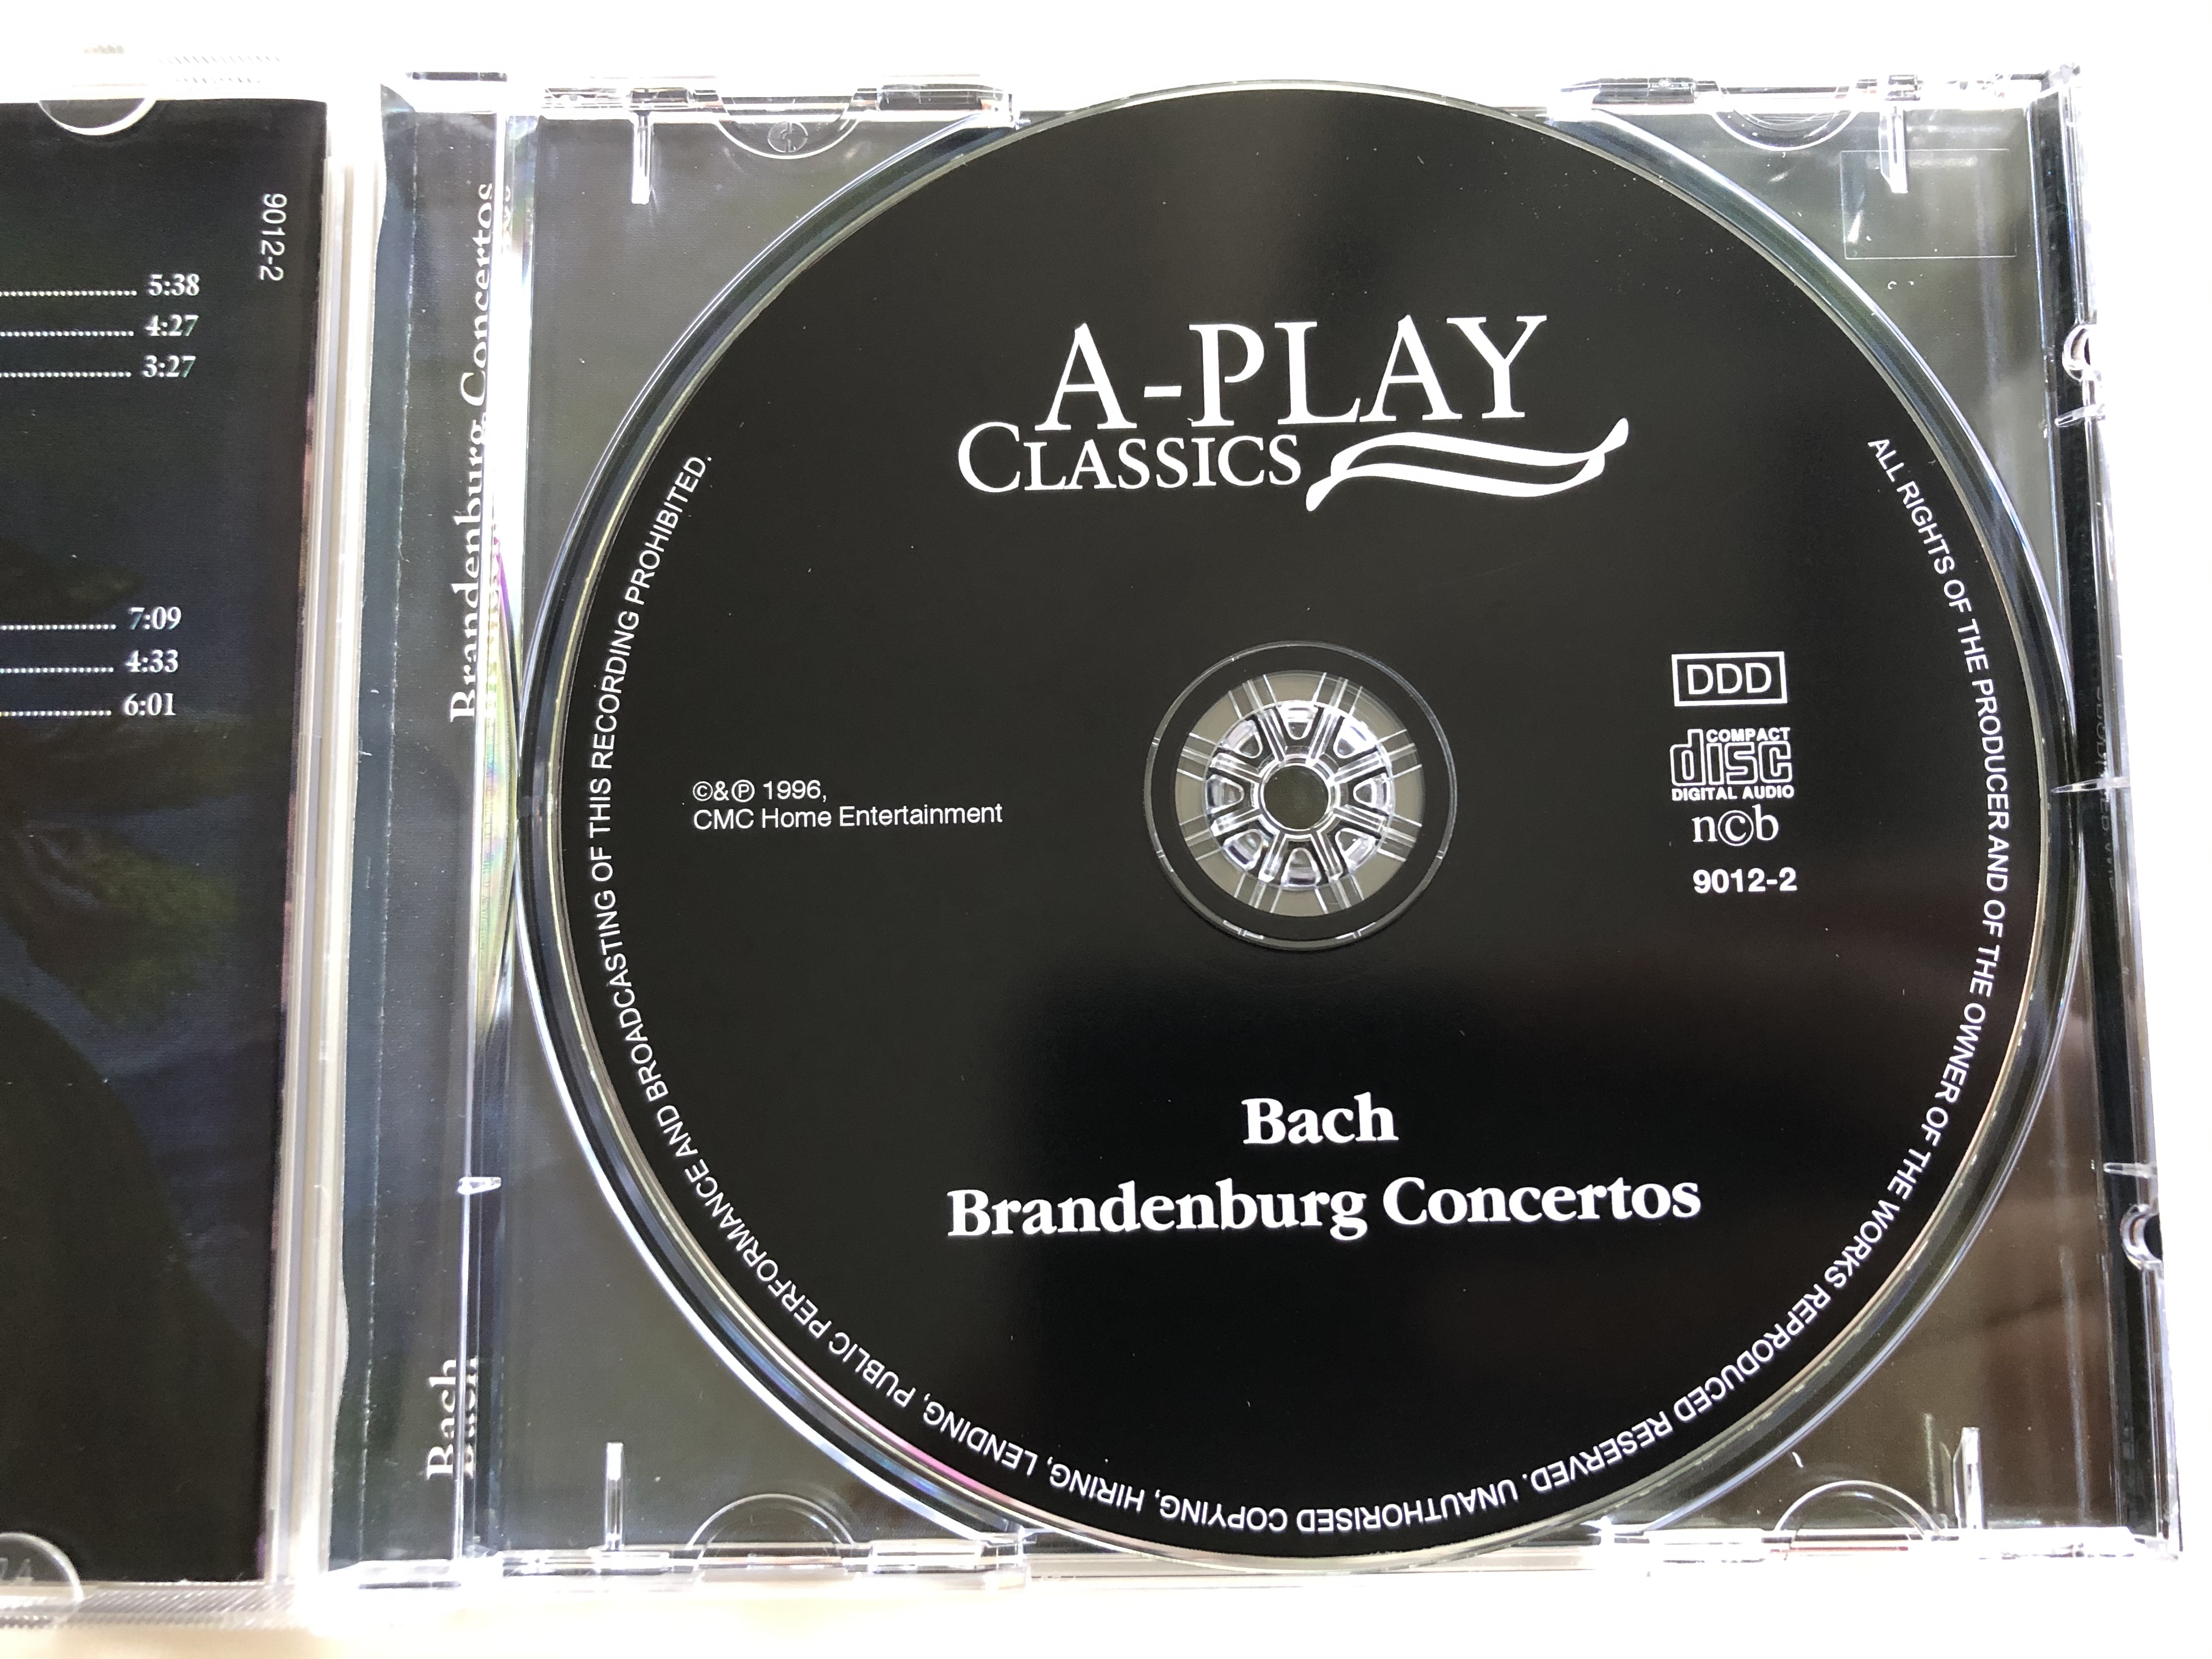 bach-brandenburg-concertos-philharmonic-slavonica-rudolf-pribil-christiane-jacottet-miklos-spanyi-a-play-classics-audio-cd-1996-9012-2-4-.jpg